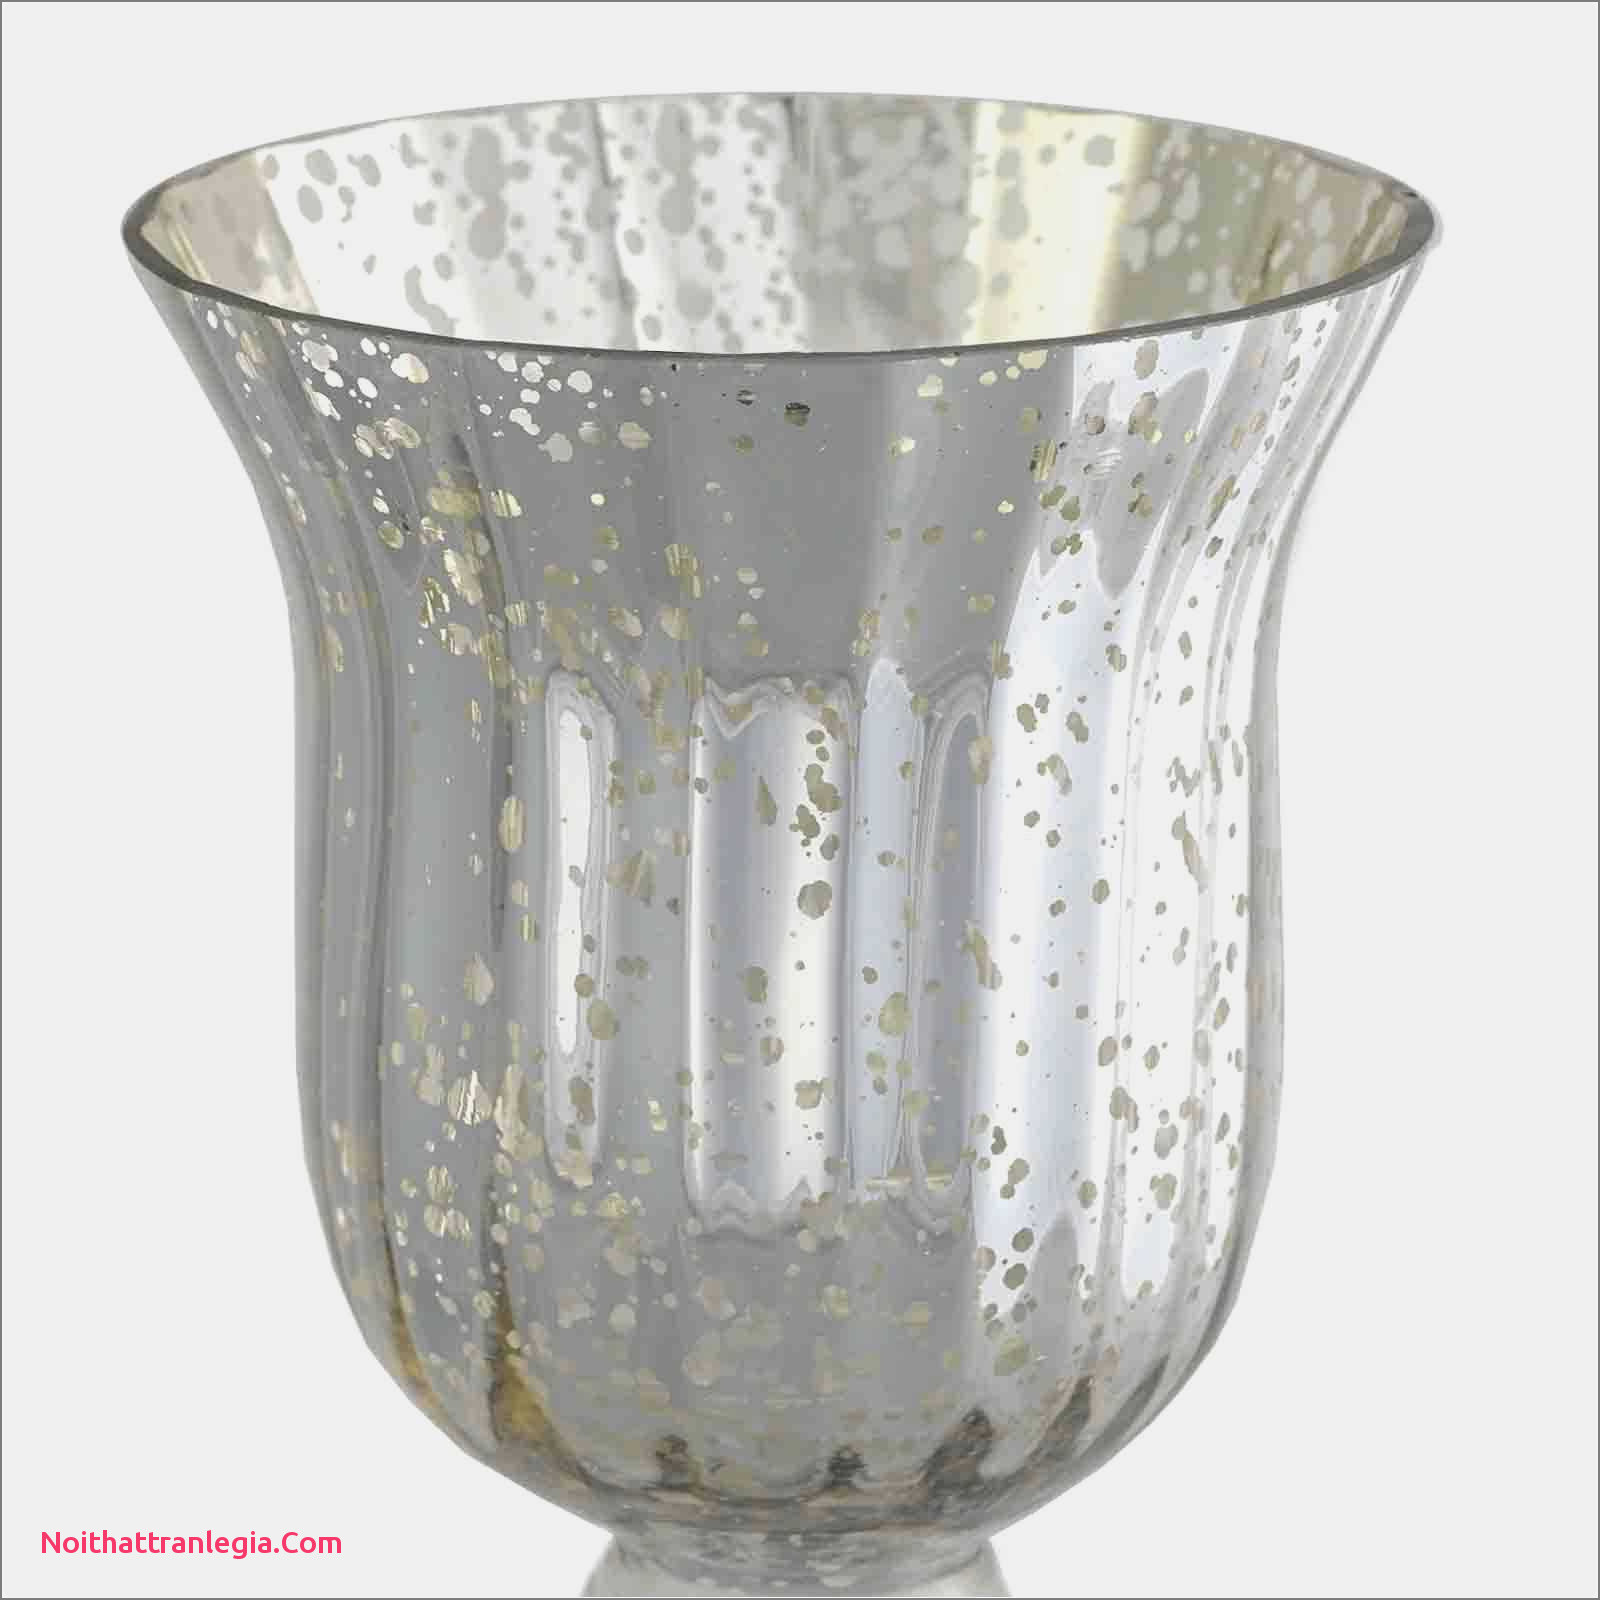 mercury glass bowl vase of 20 wedding vases noithattranlegia vases design in wedding guest gift ideas inspirational candles for wedding favors superb pe s5h vases candle vase i